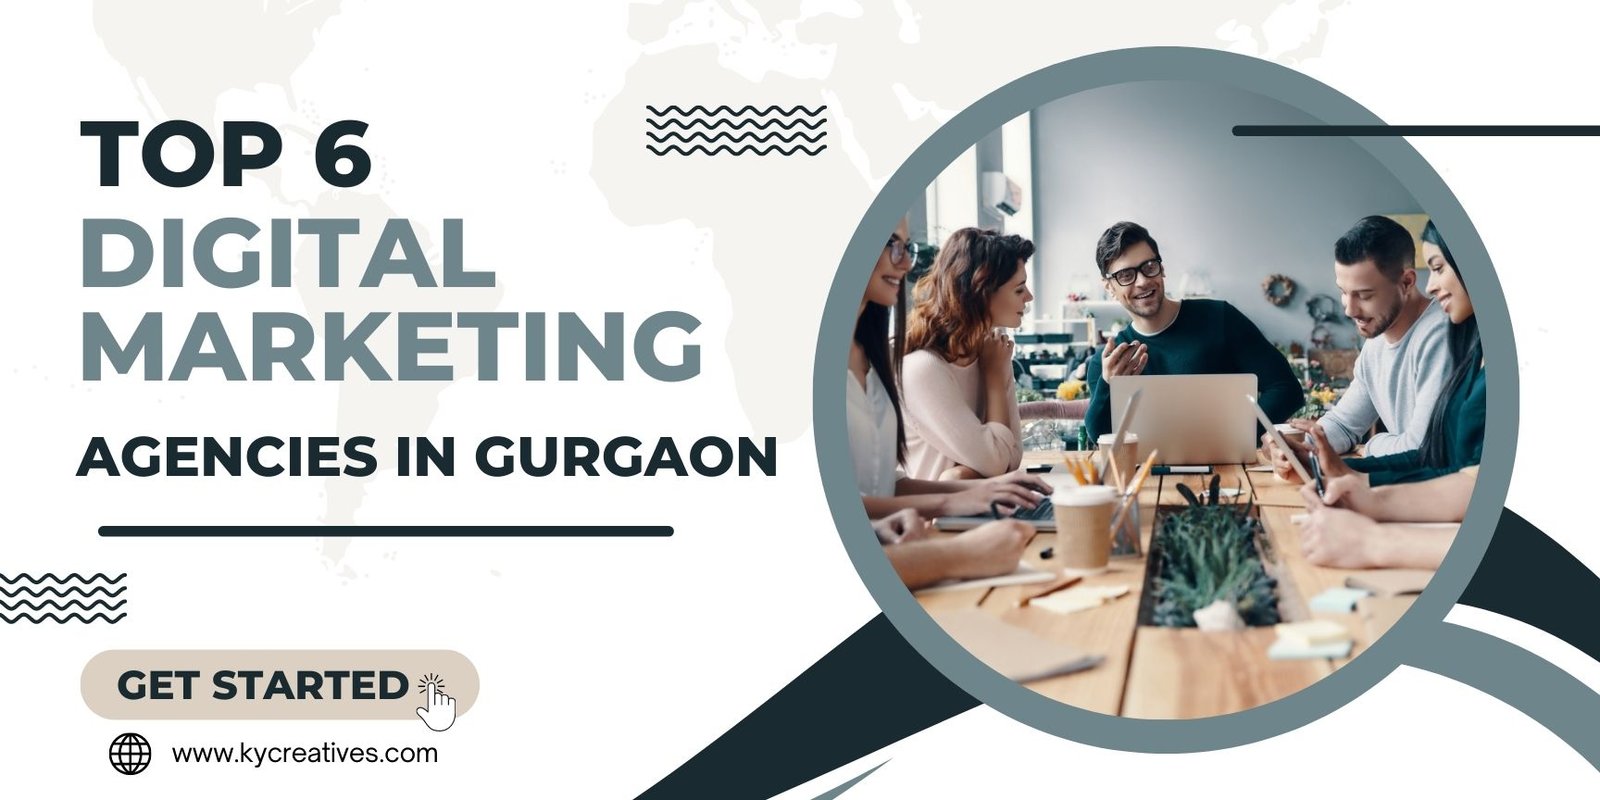 Top 6 digital marketing agencies in Gurgaon